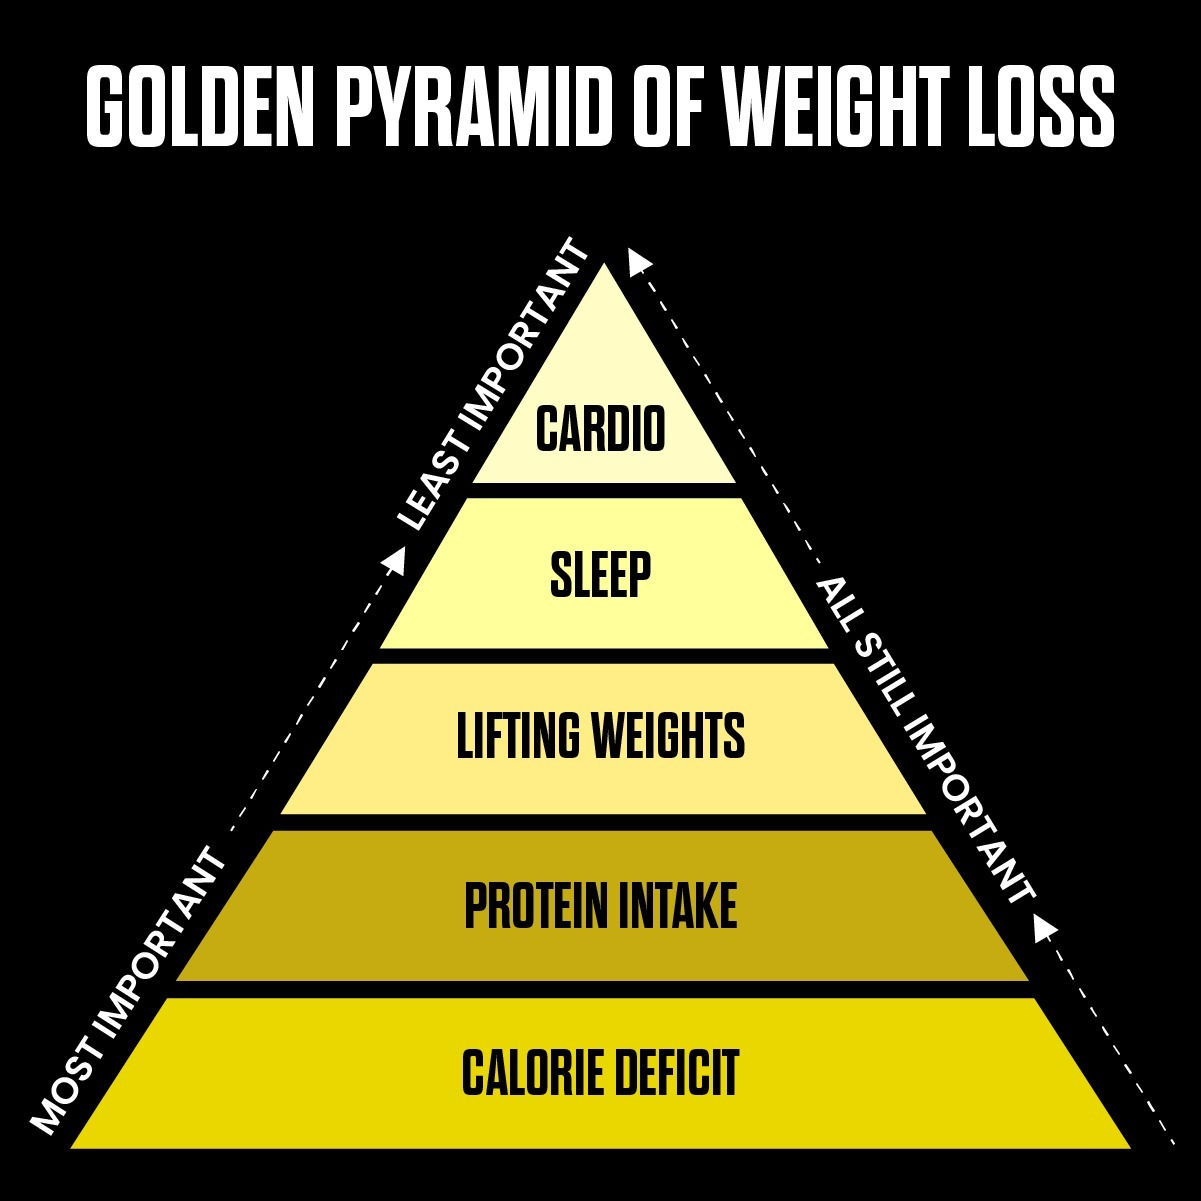 Golden Pyramid of Weight Loss Explained by Abhinav Malhotra - Best Personal Trainer Dubai UAE